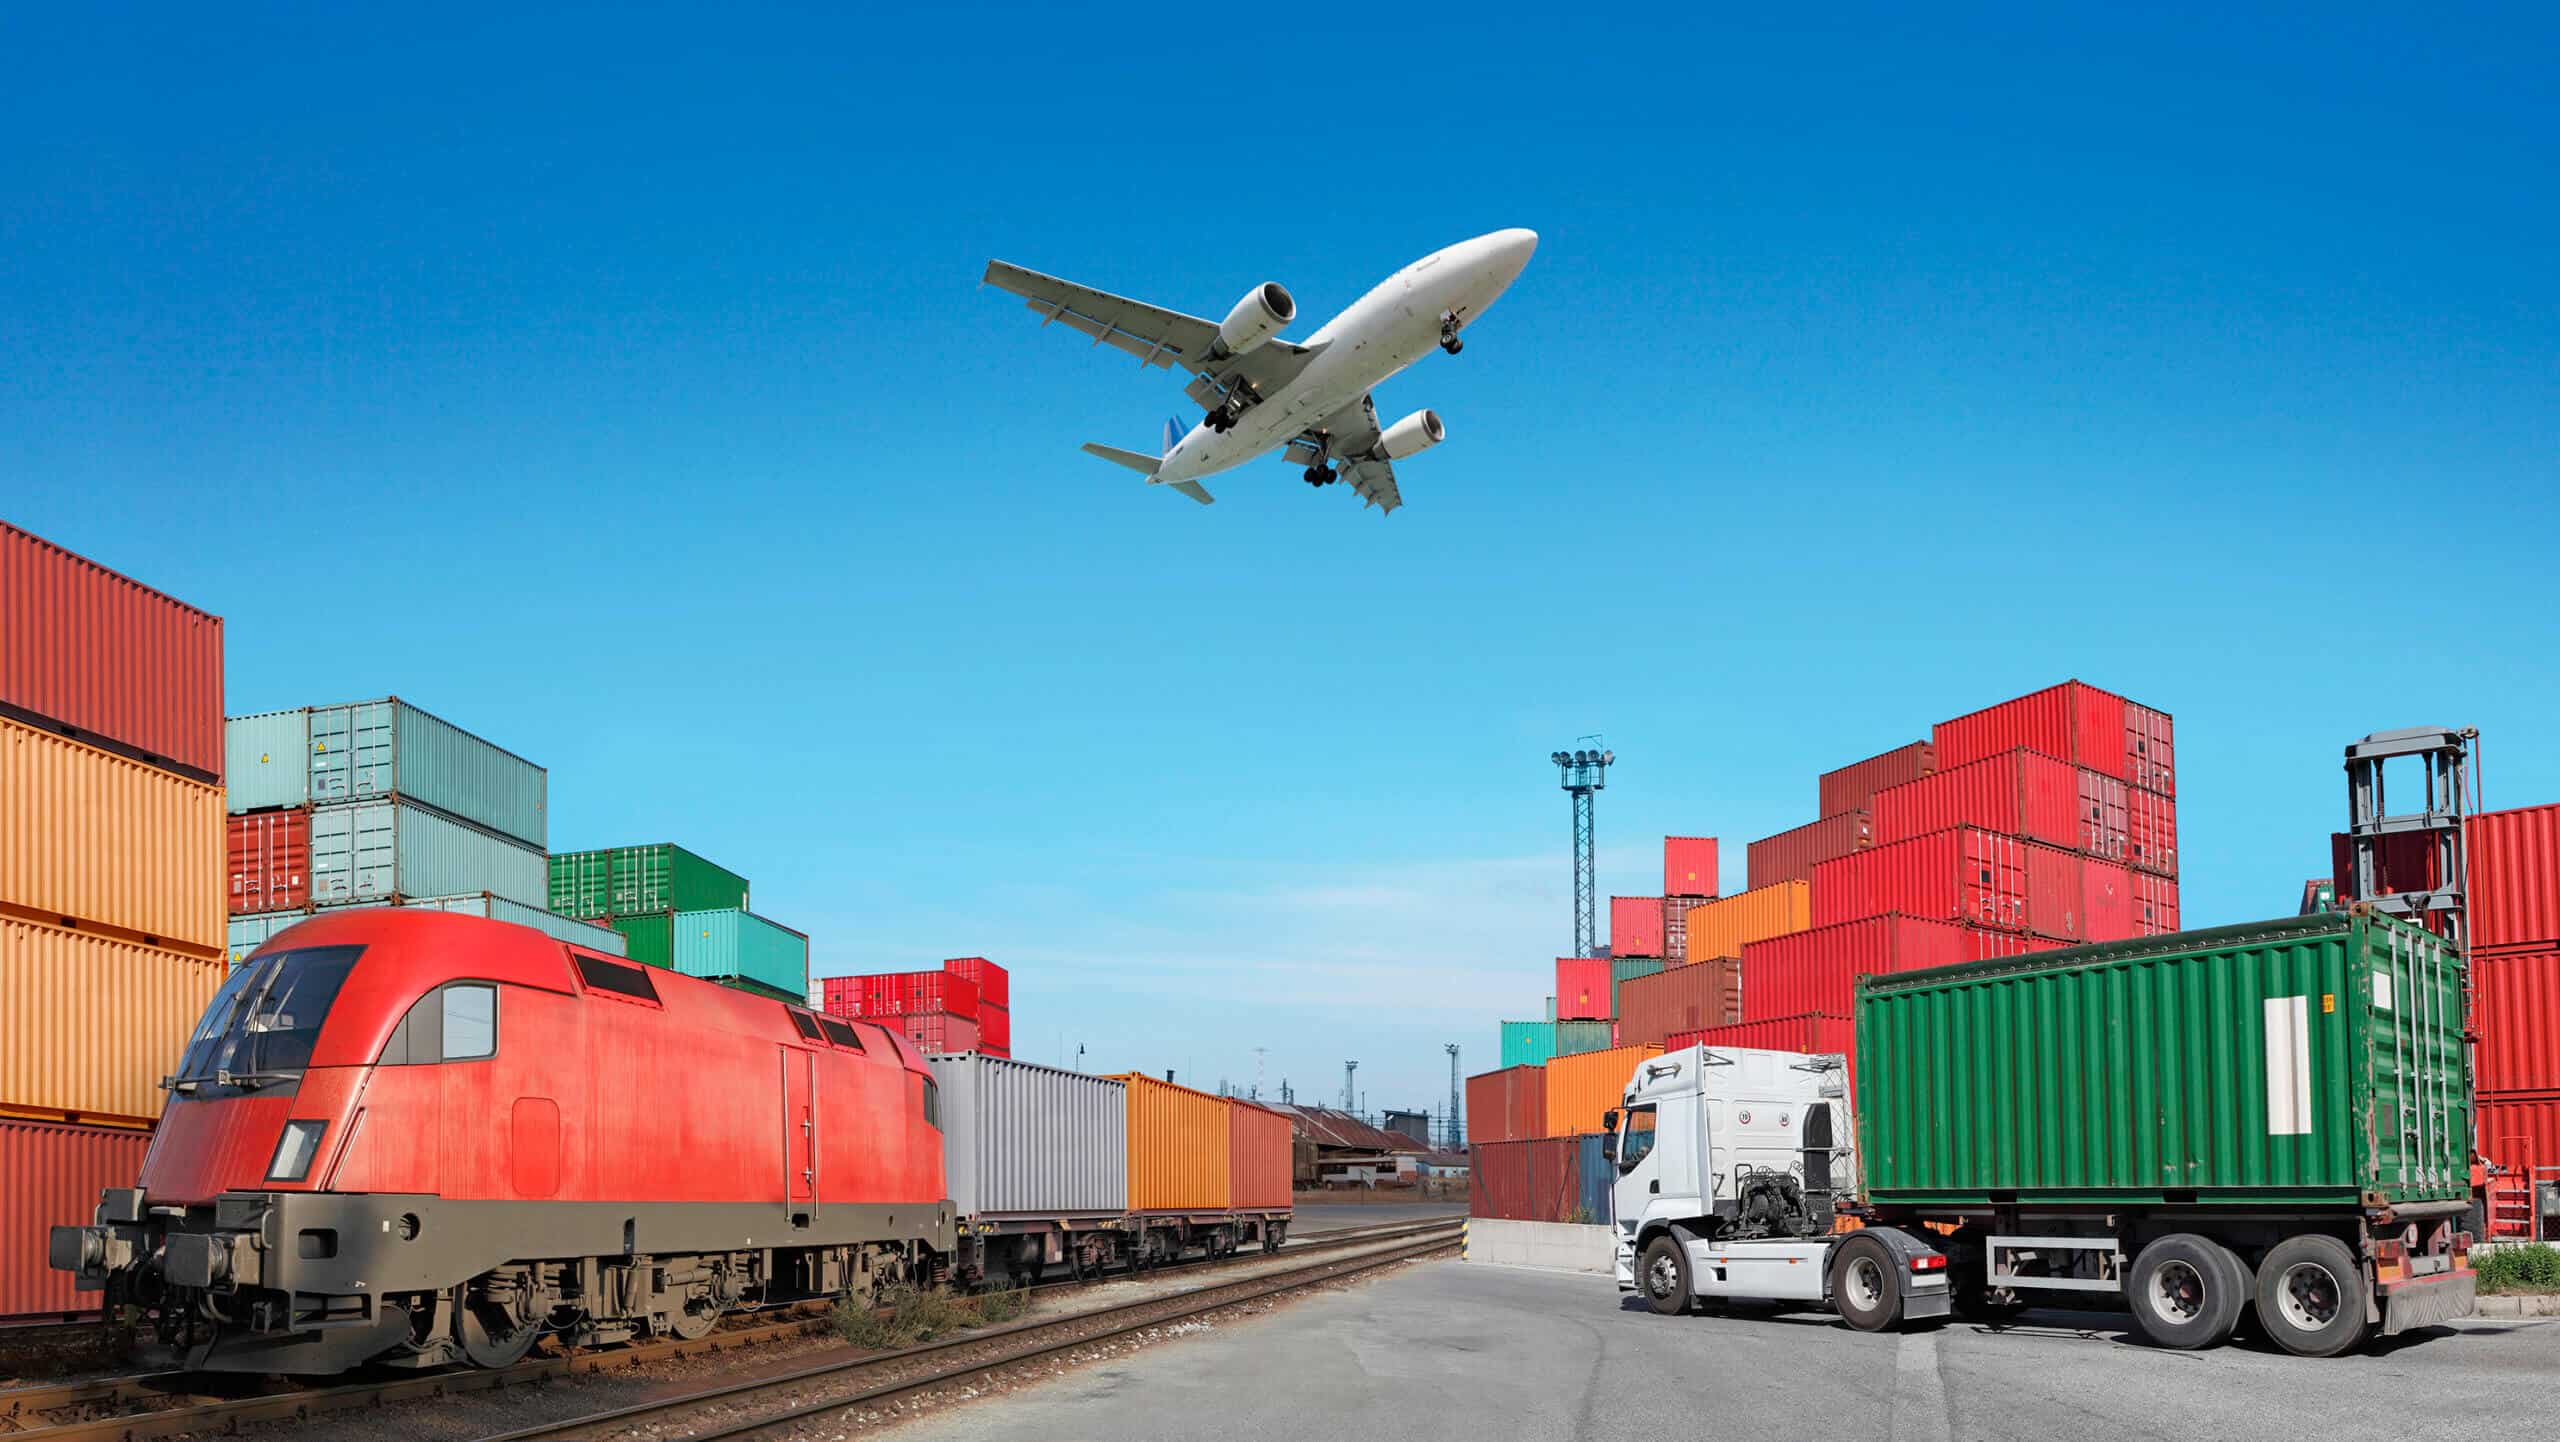 Global travel via cargo train, container ship, air